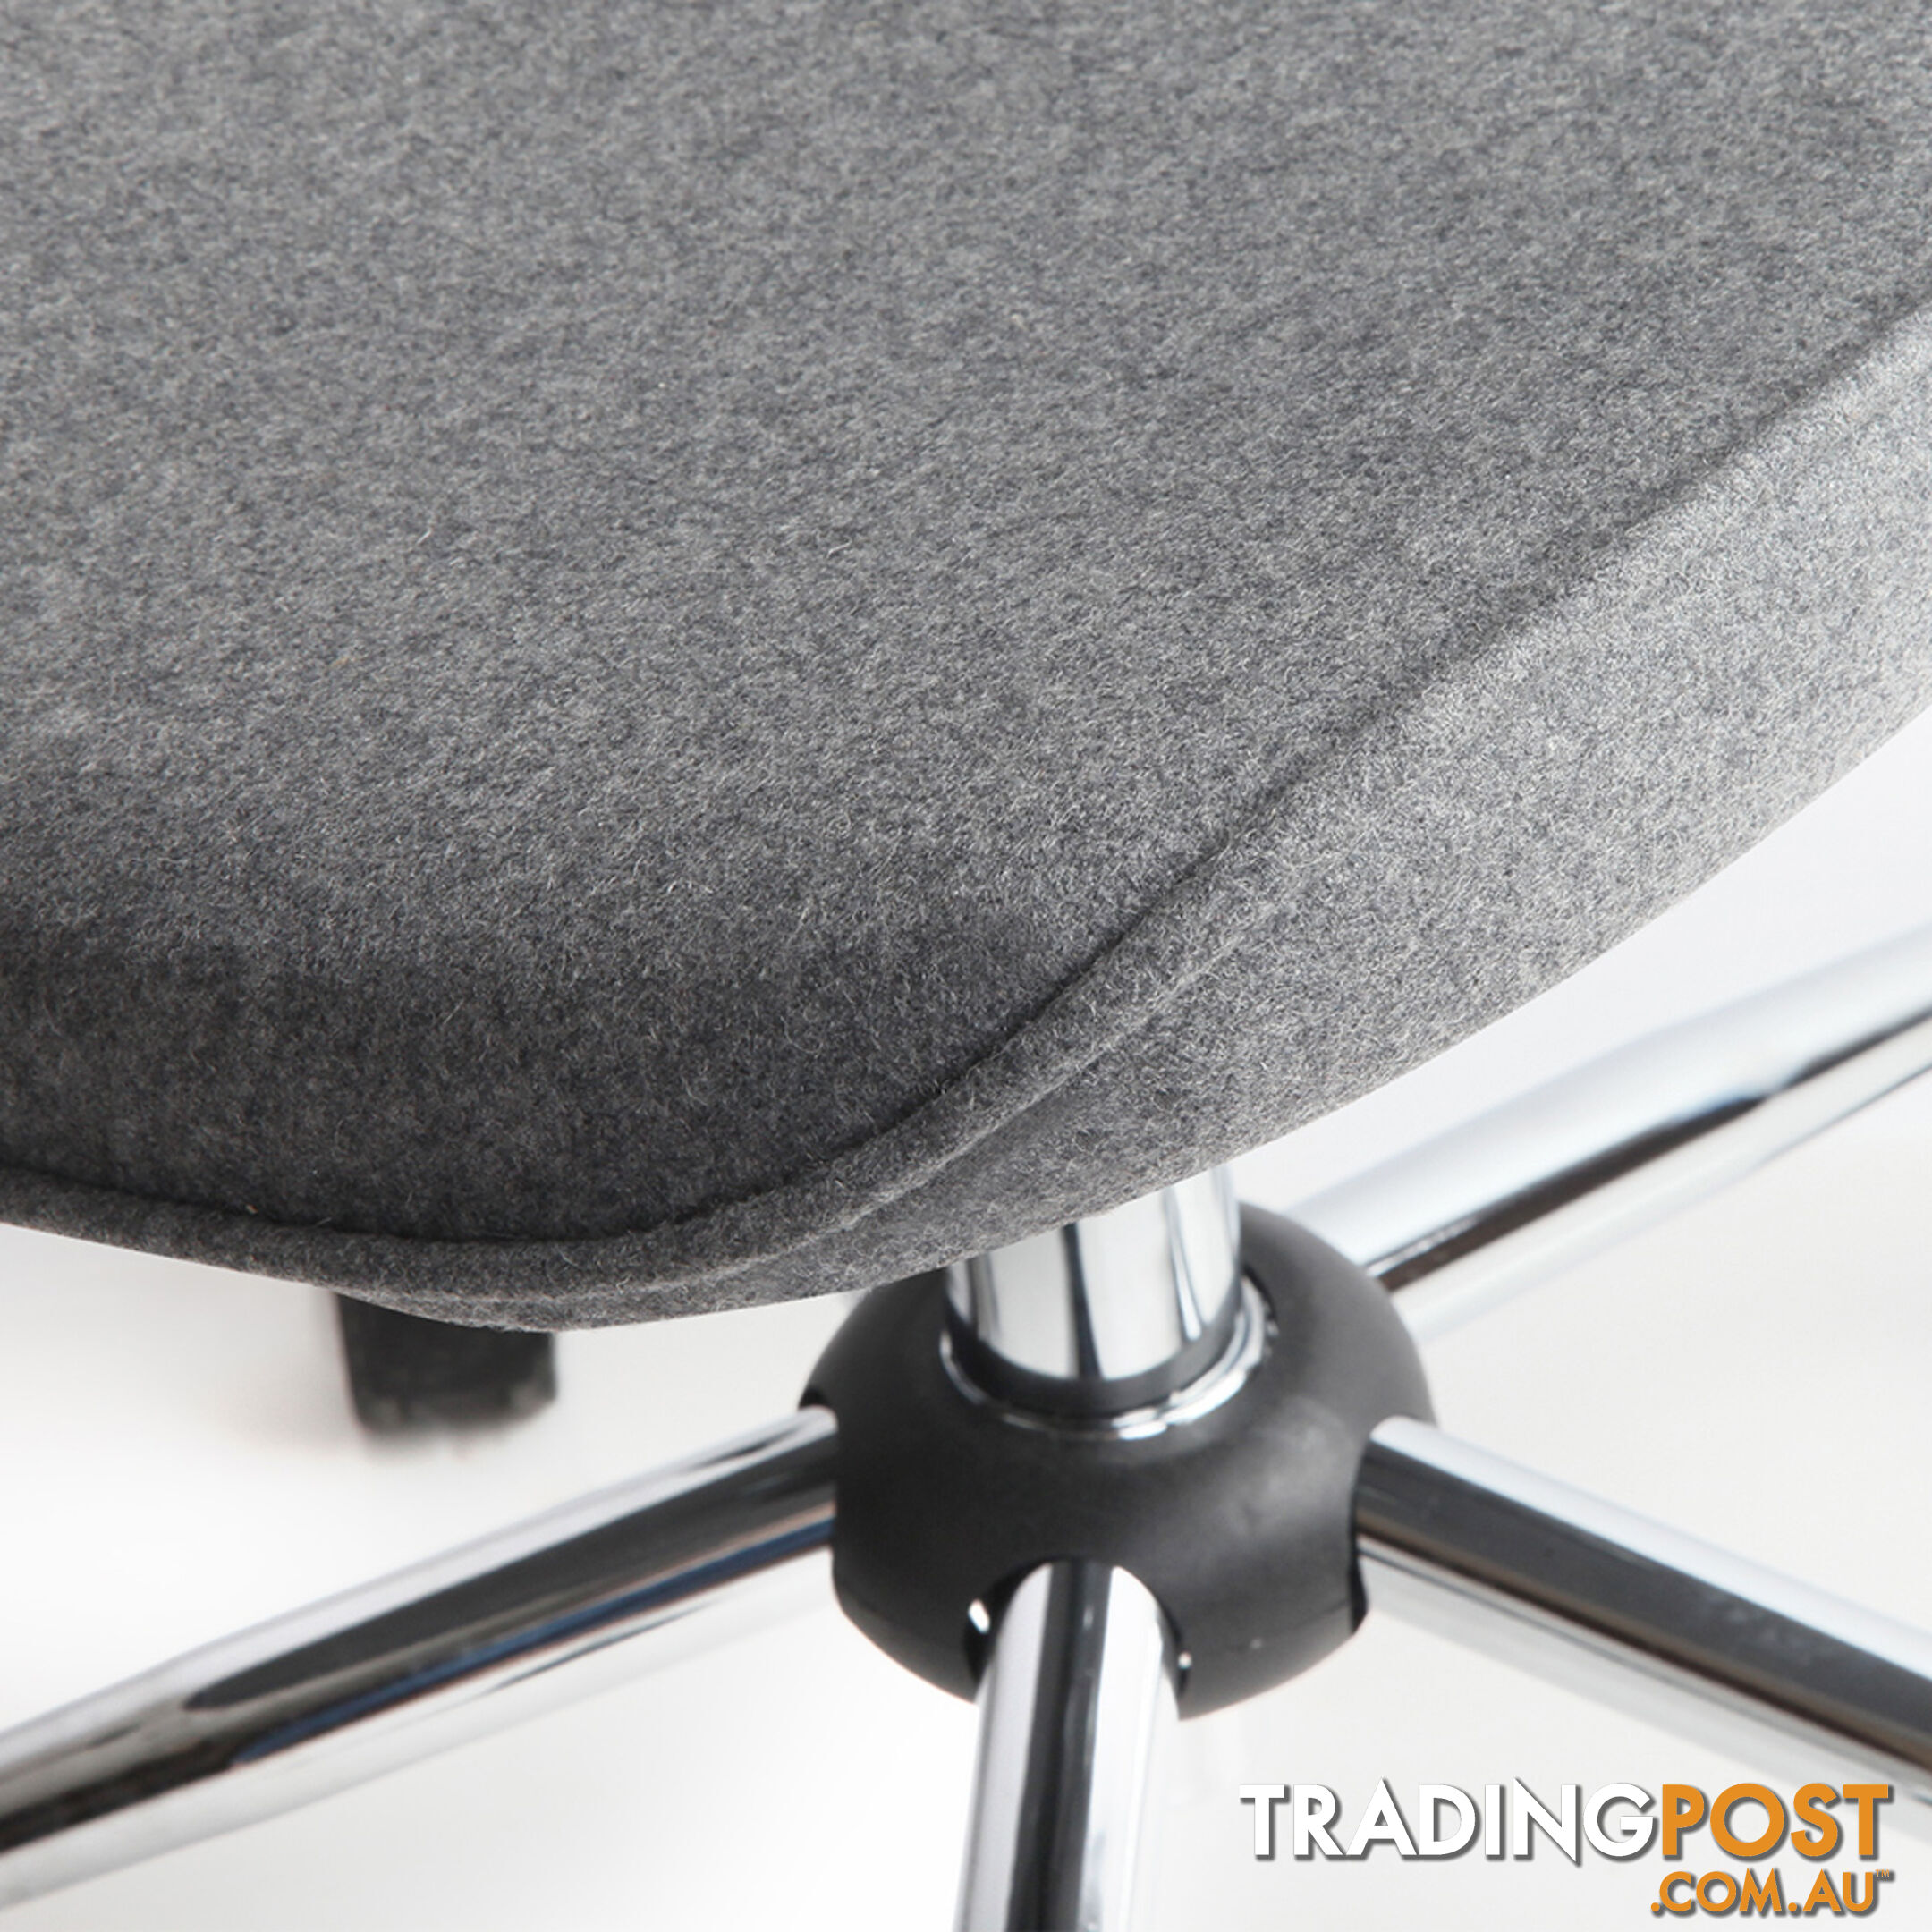 Modern Office Desk Fabric Chair _ Grey